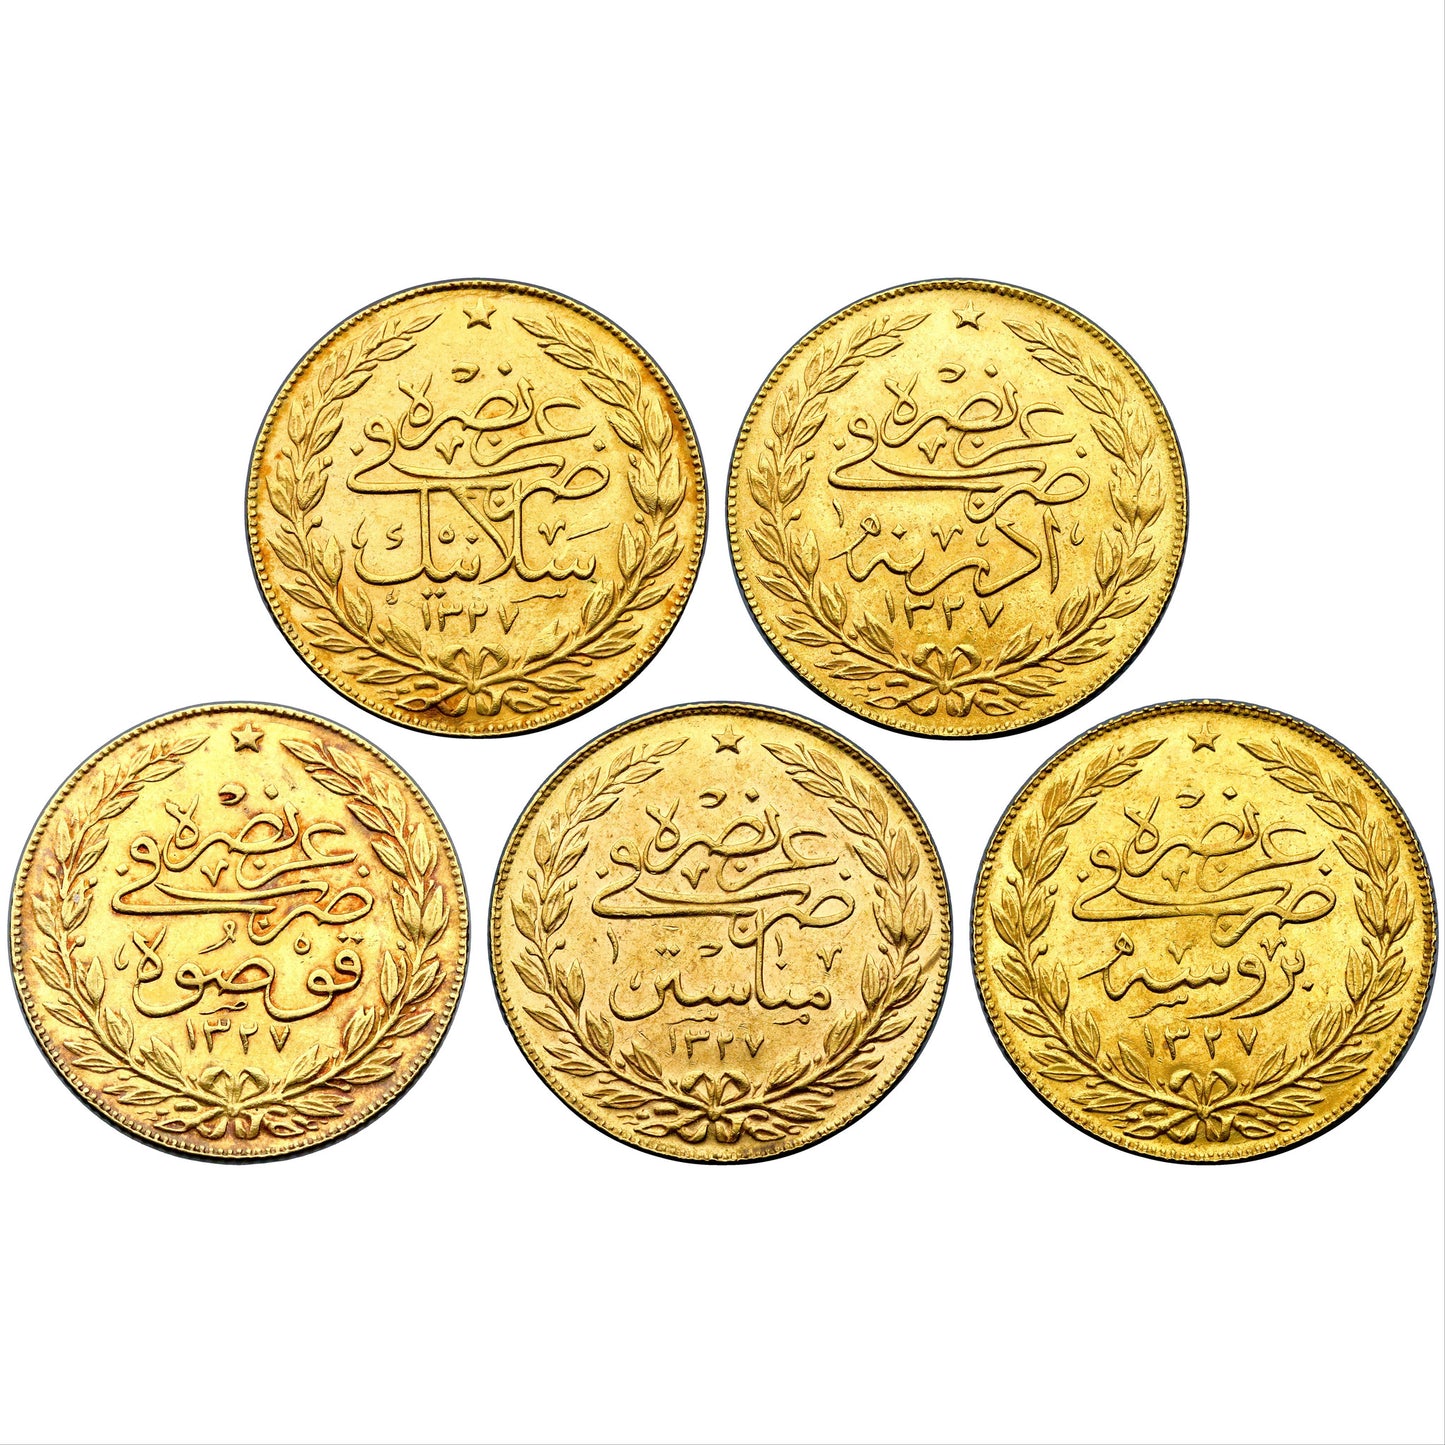 Ottoman, Mehmed V, set of 5 gold 100 kurush, complete set of mint-visit issues